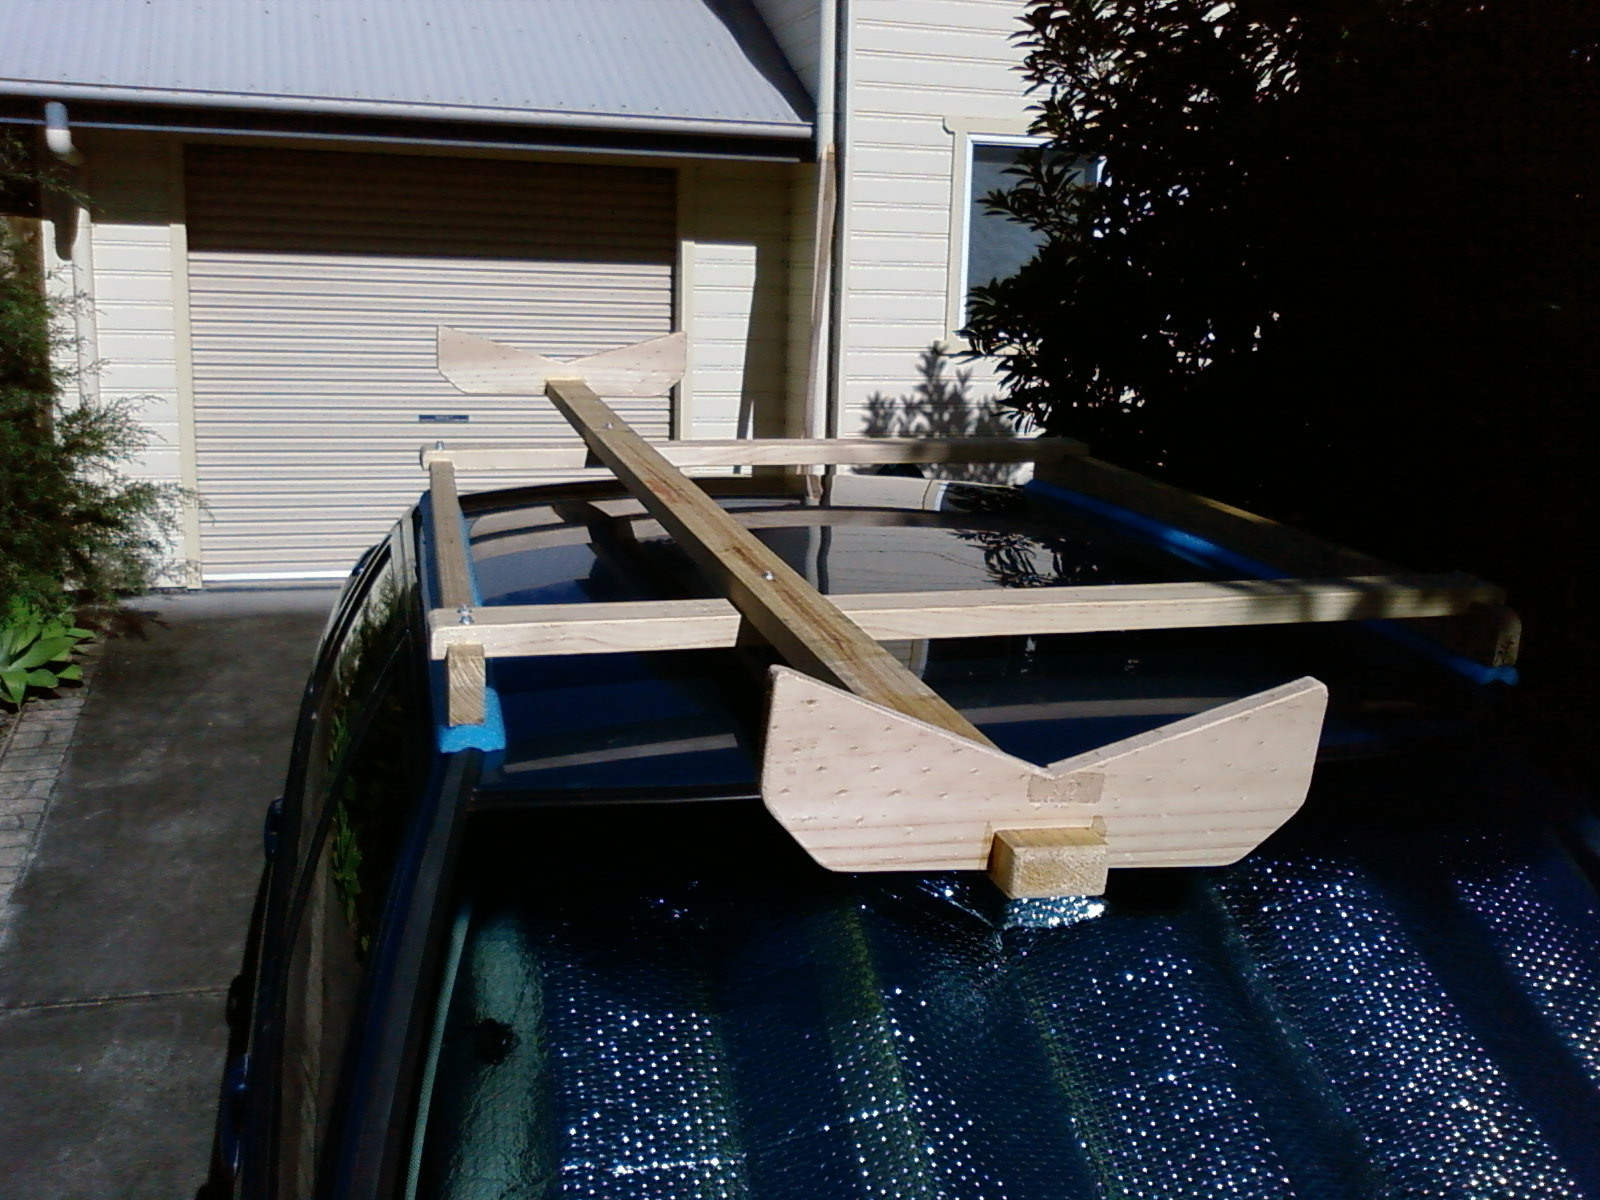 Best ideas about DIY Kayak Roof Rack
. Save or Pin Useful Diy kayak roof mount Now.